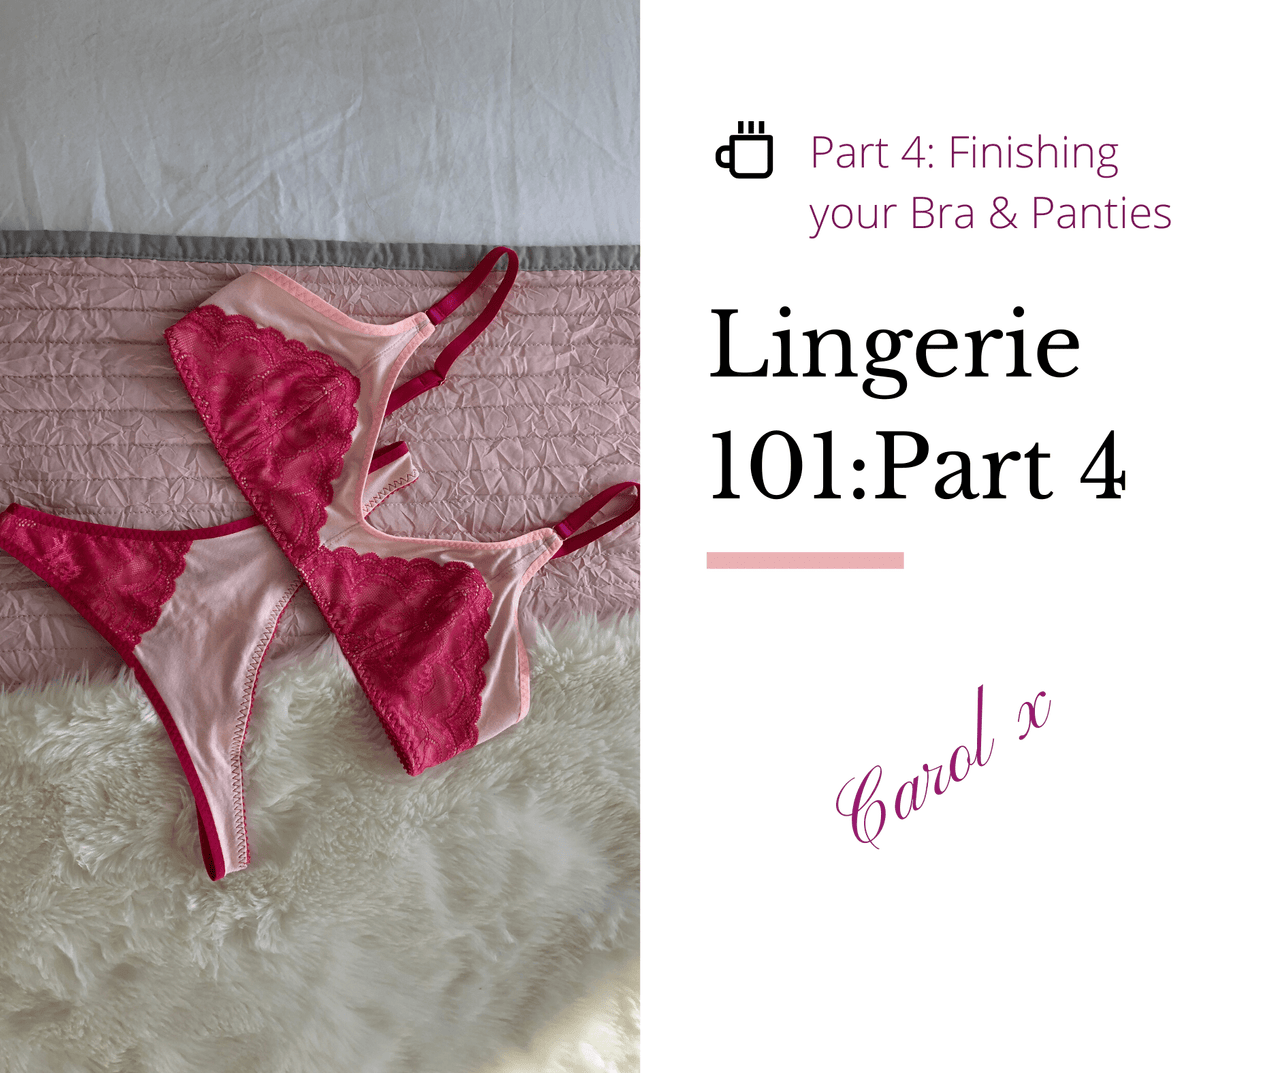 A Few Threads Loose: Lingerie in Profile: A Beautiful Lace Bra